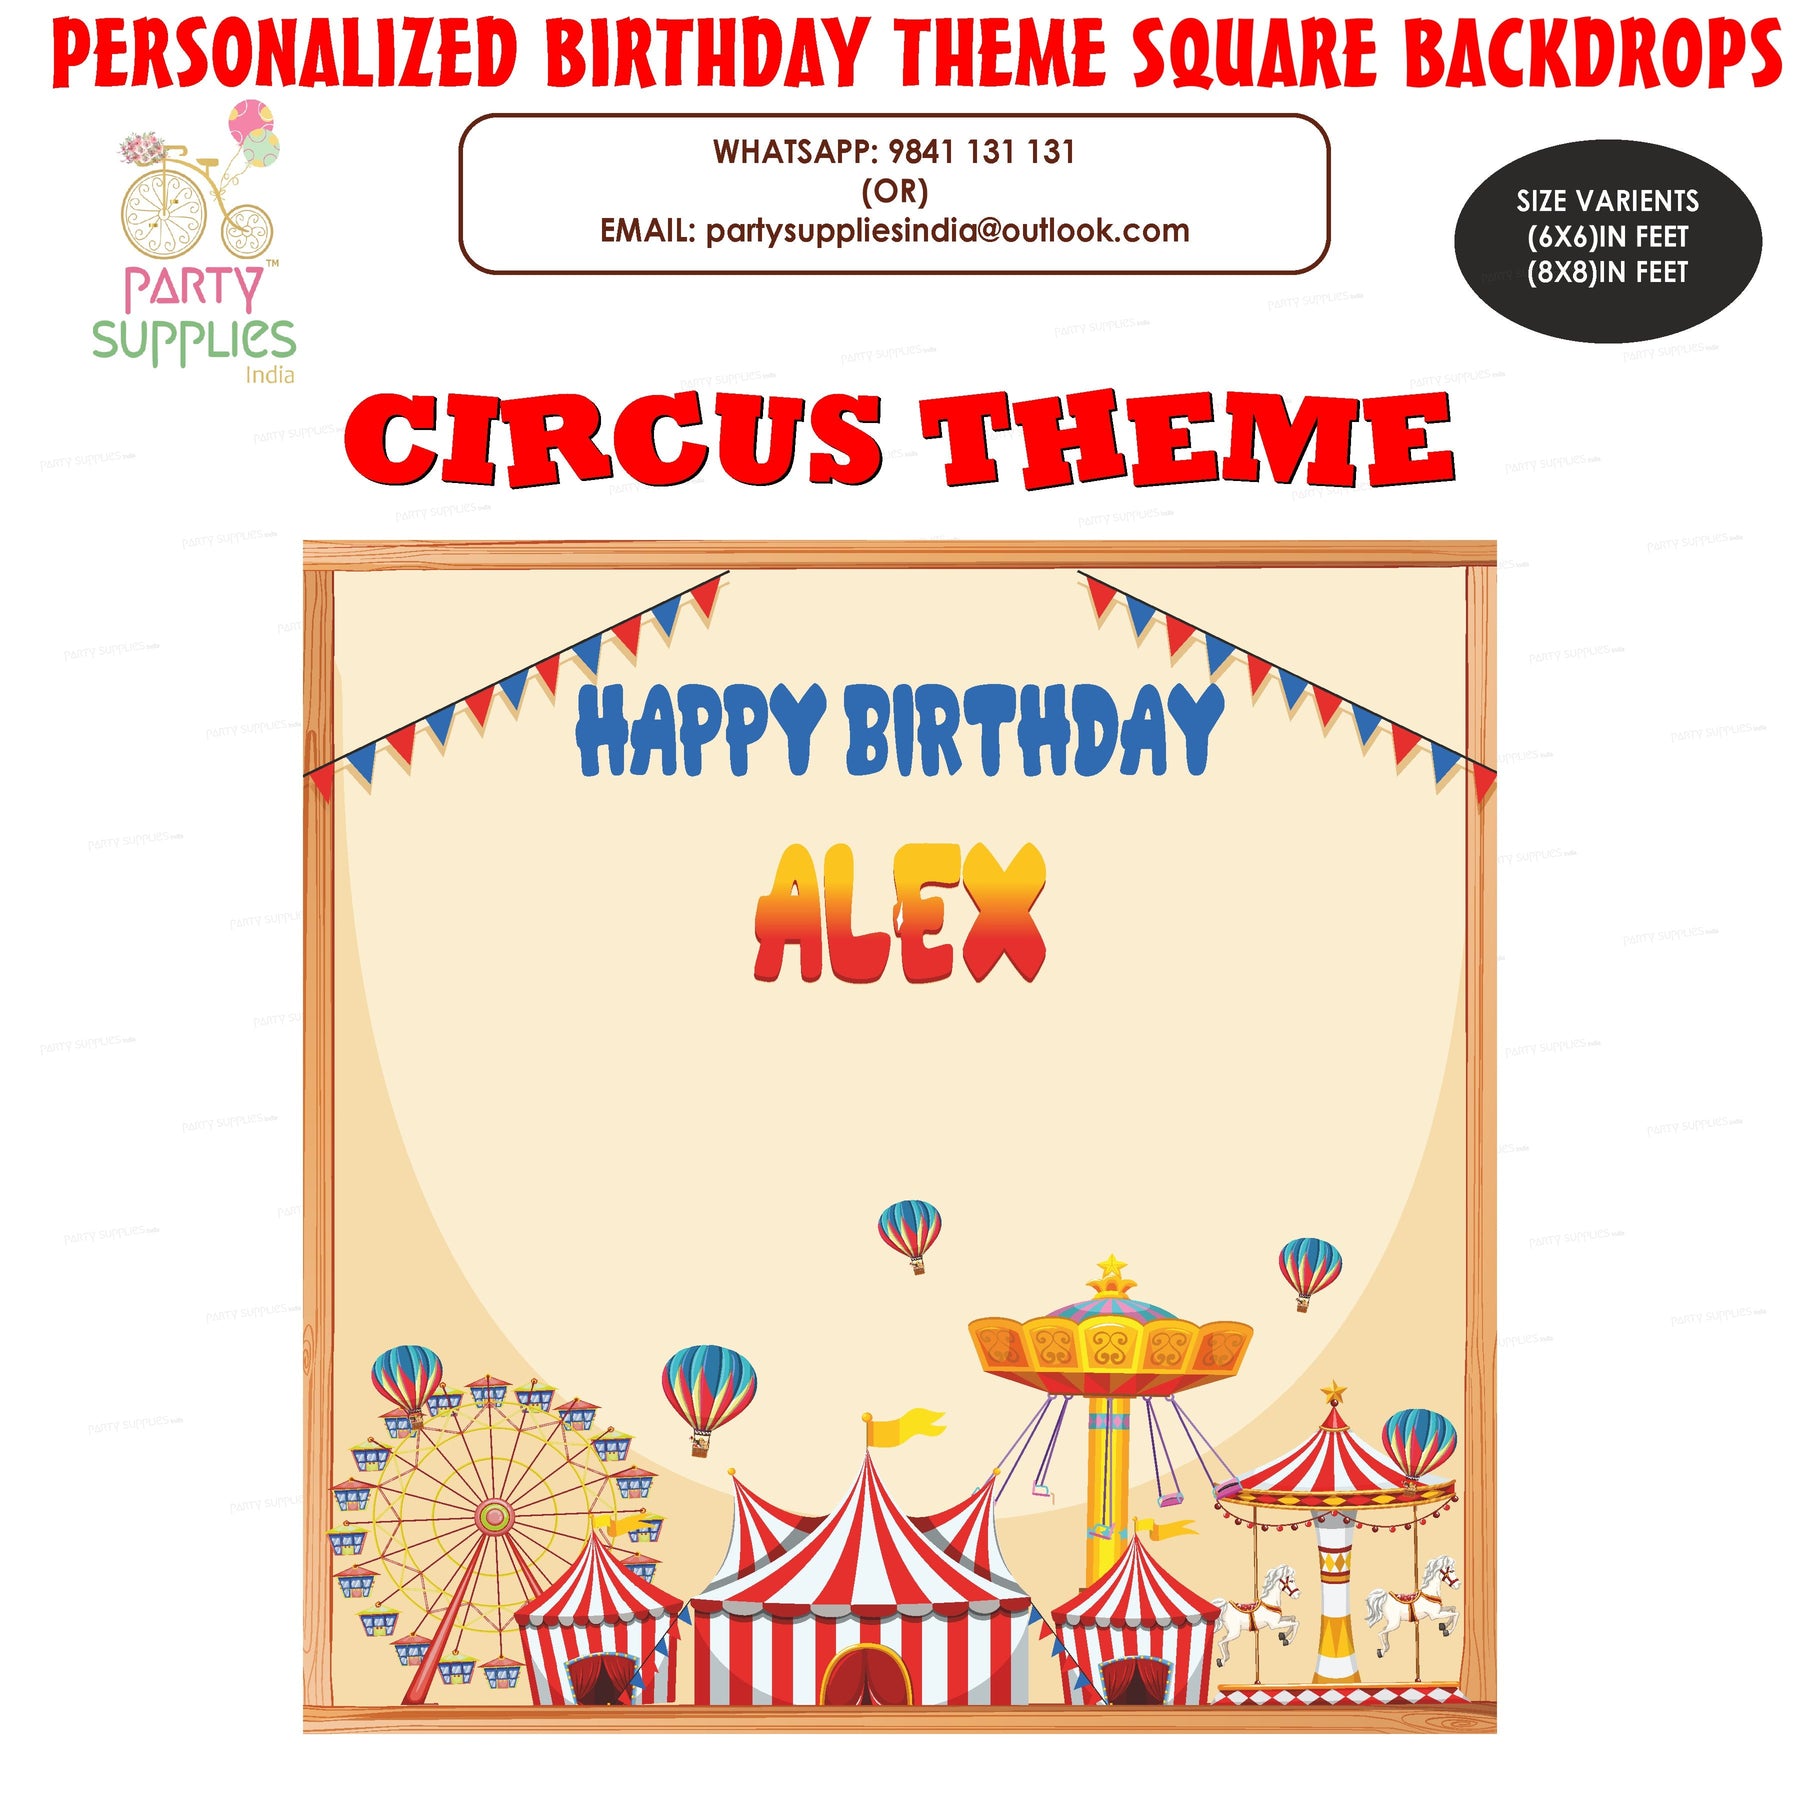 PSI Circus Theme Square Backdrop